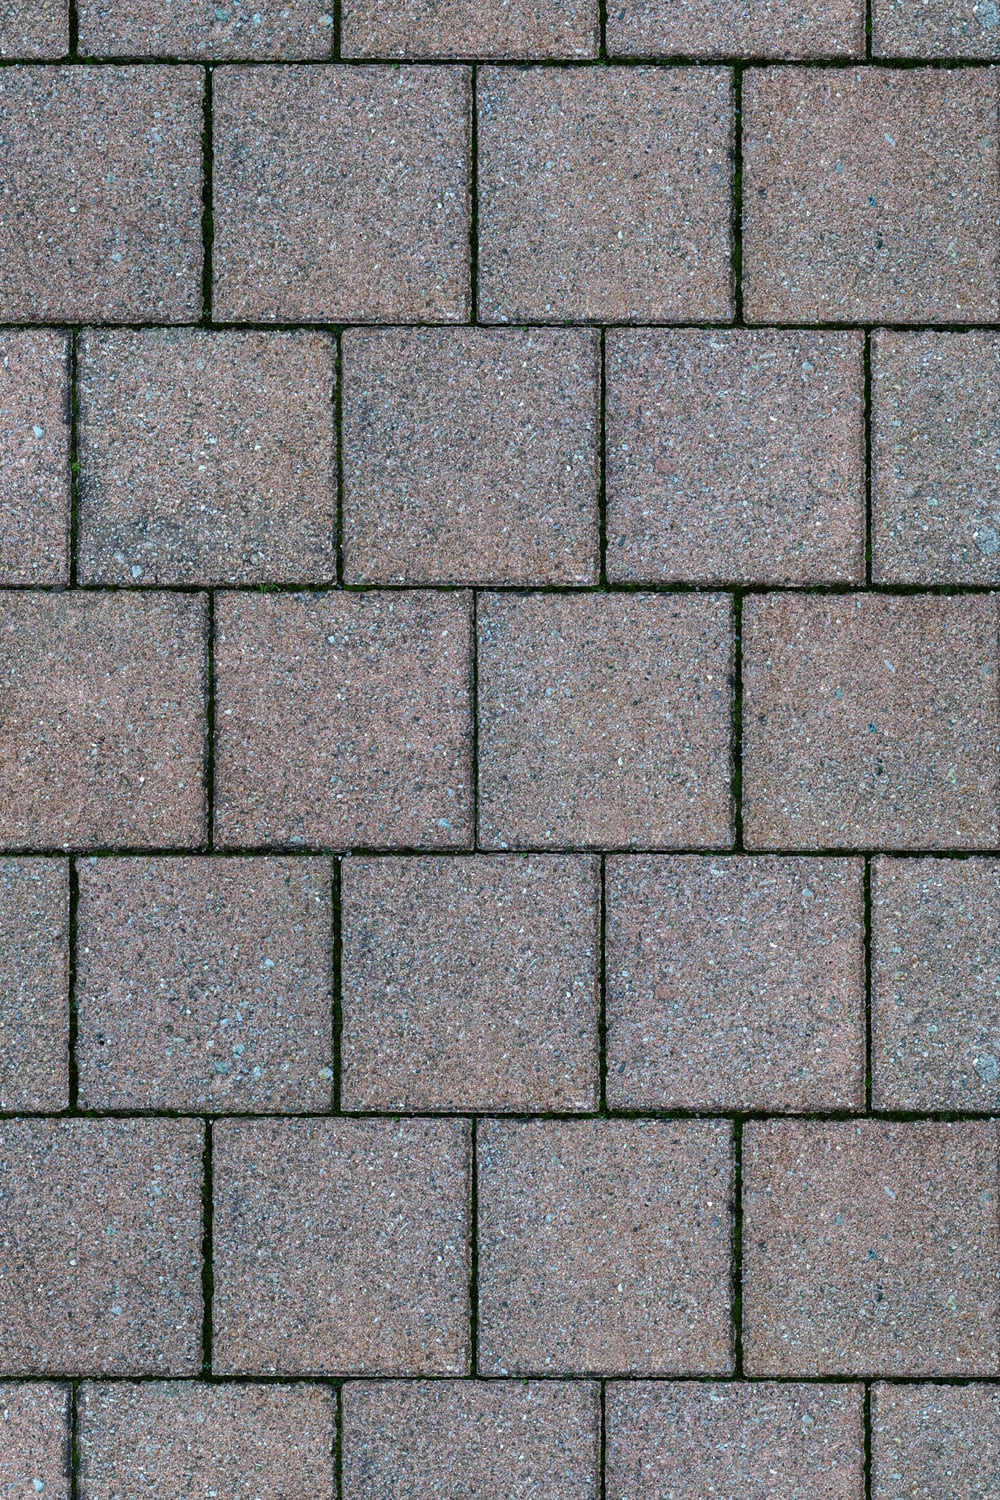 Square stone pavement close-up